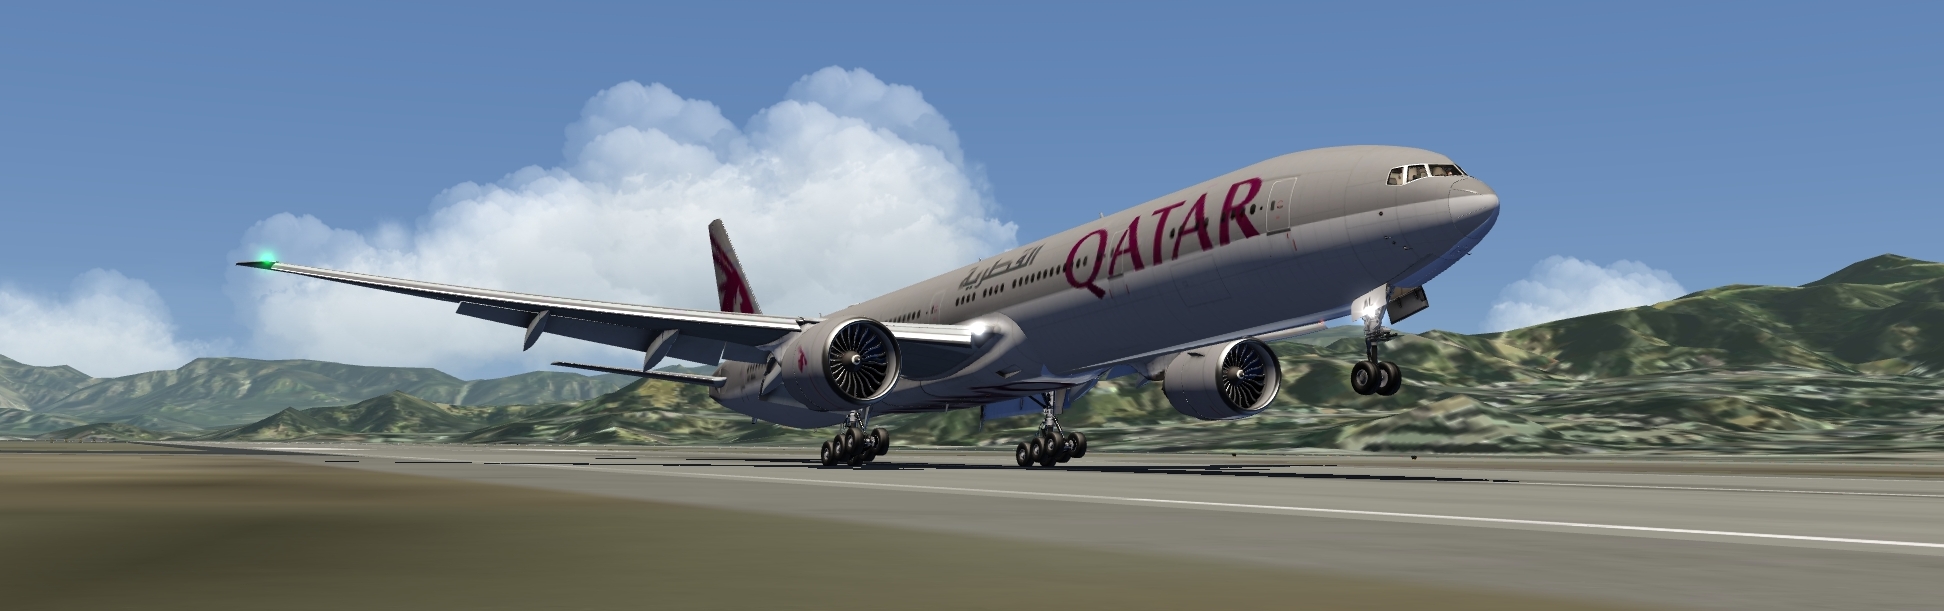 Qatar Airlines pilot : - V1, Rotate.